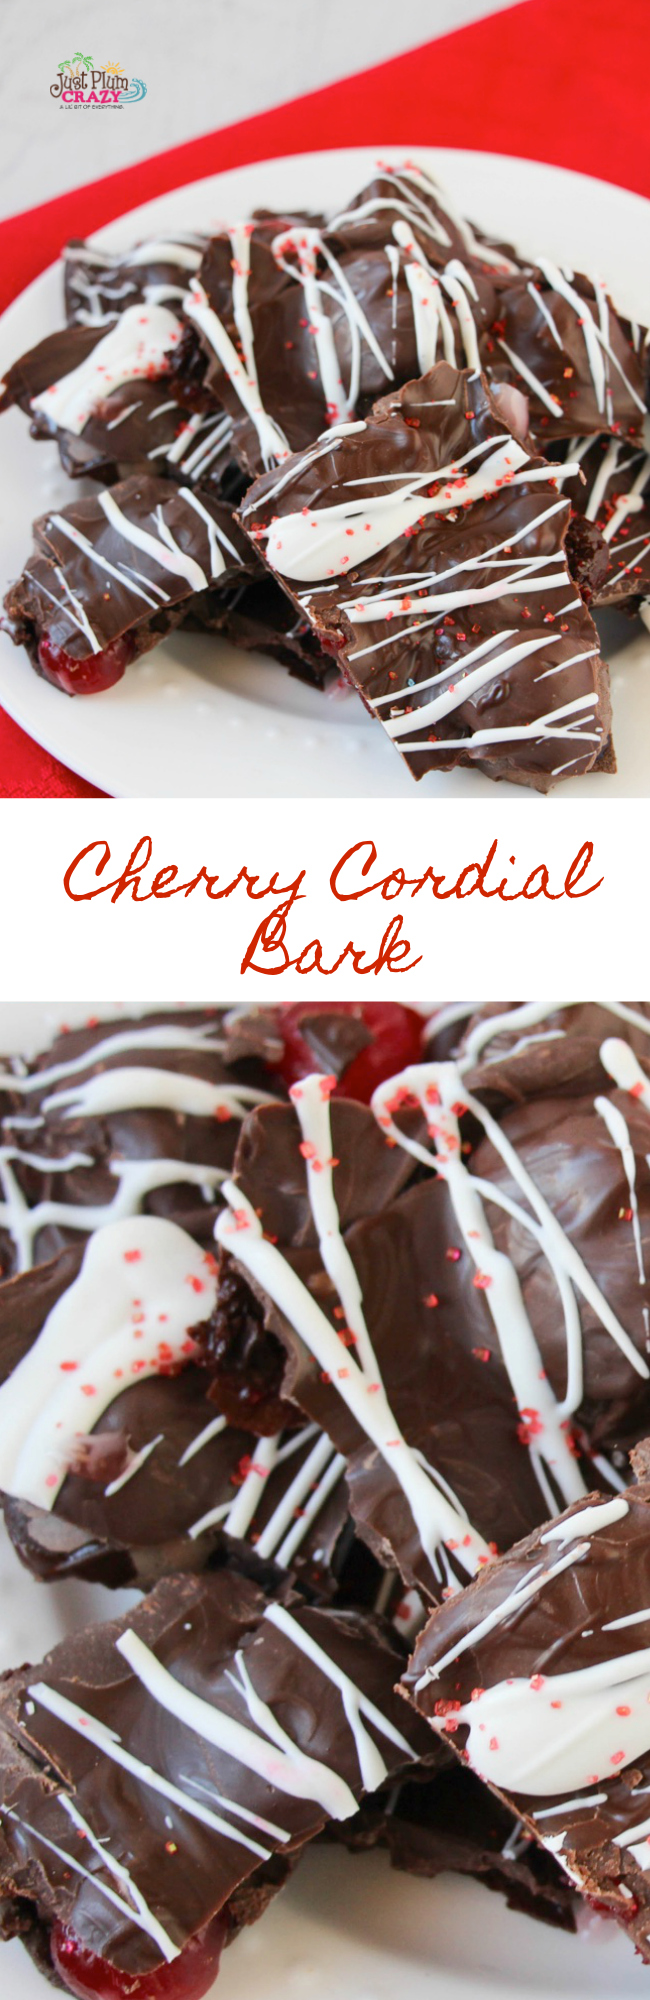 Cherry Cordial Bark Recipe